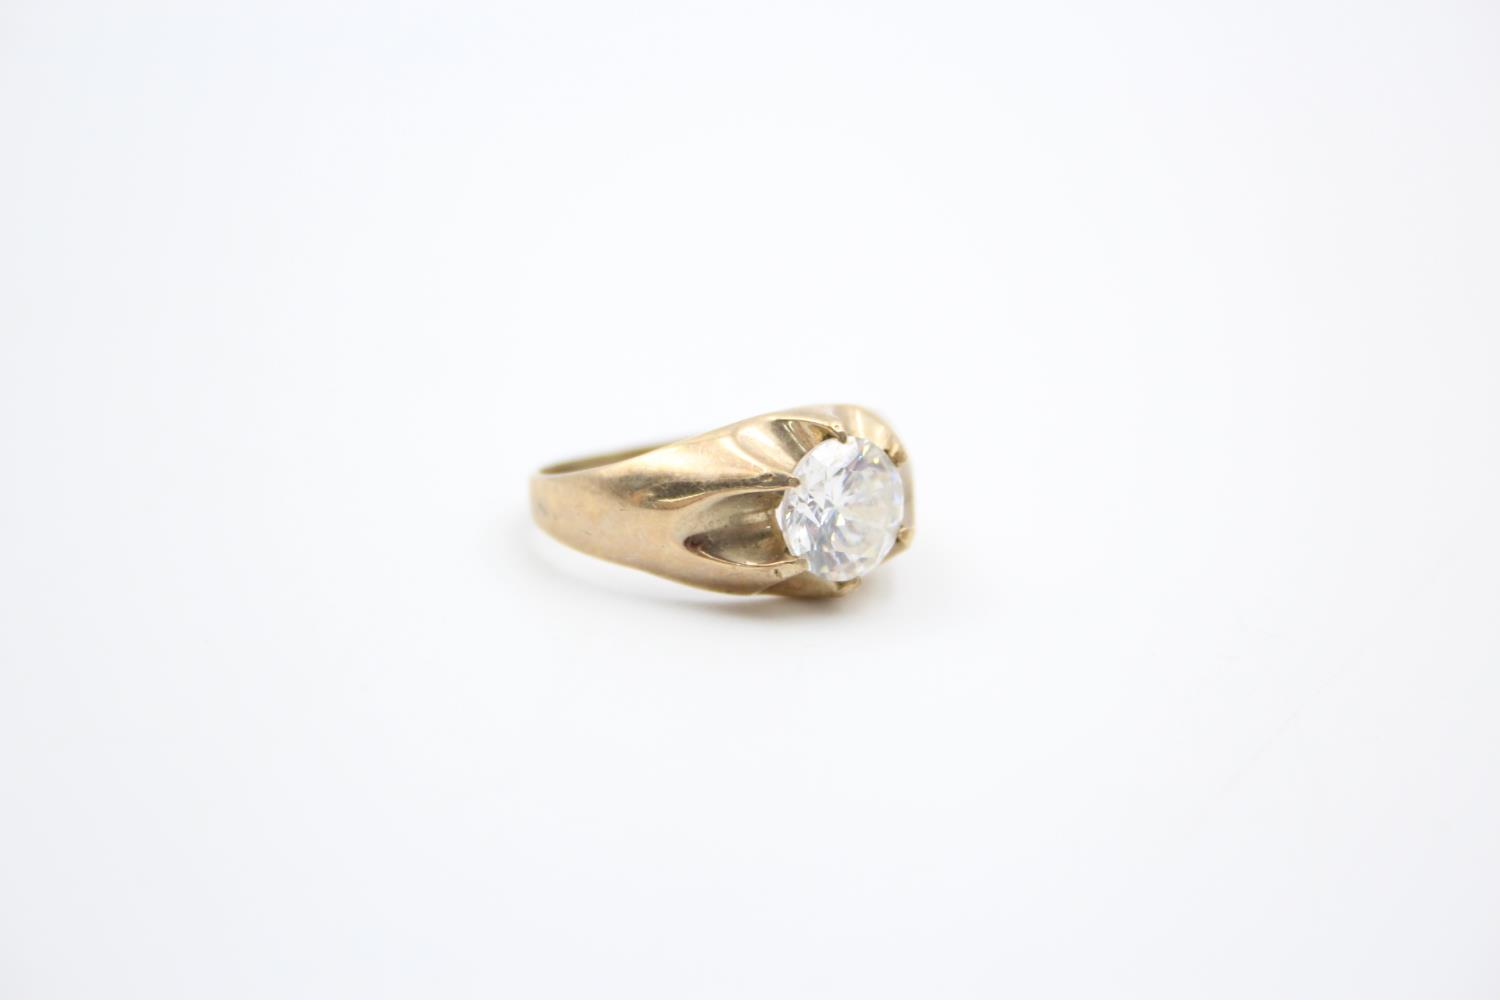 9ct Gold gemstone ring 4.2 grams gross - Image 5 of 5